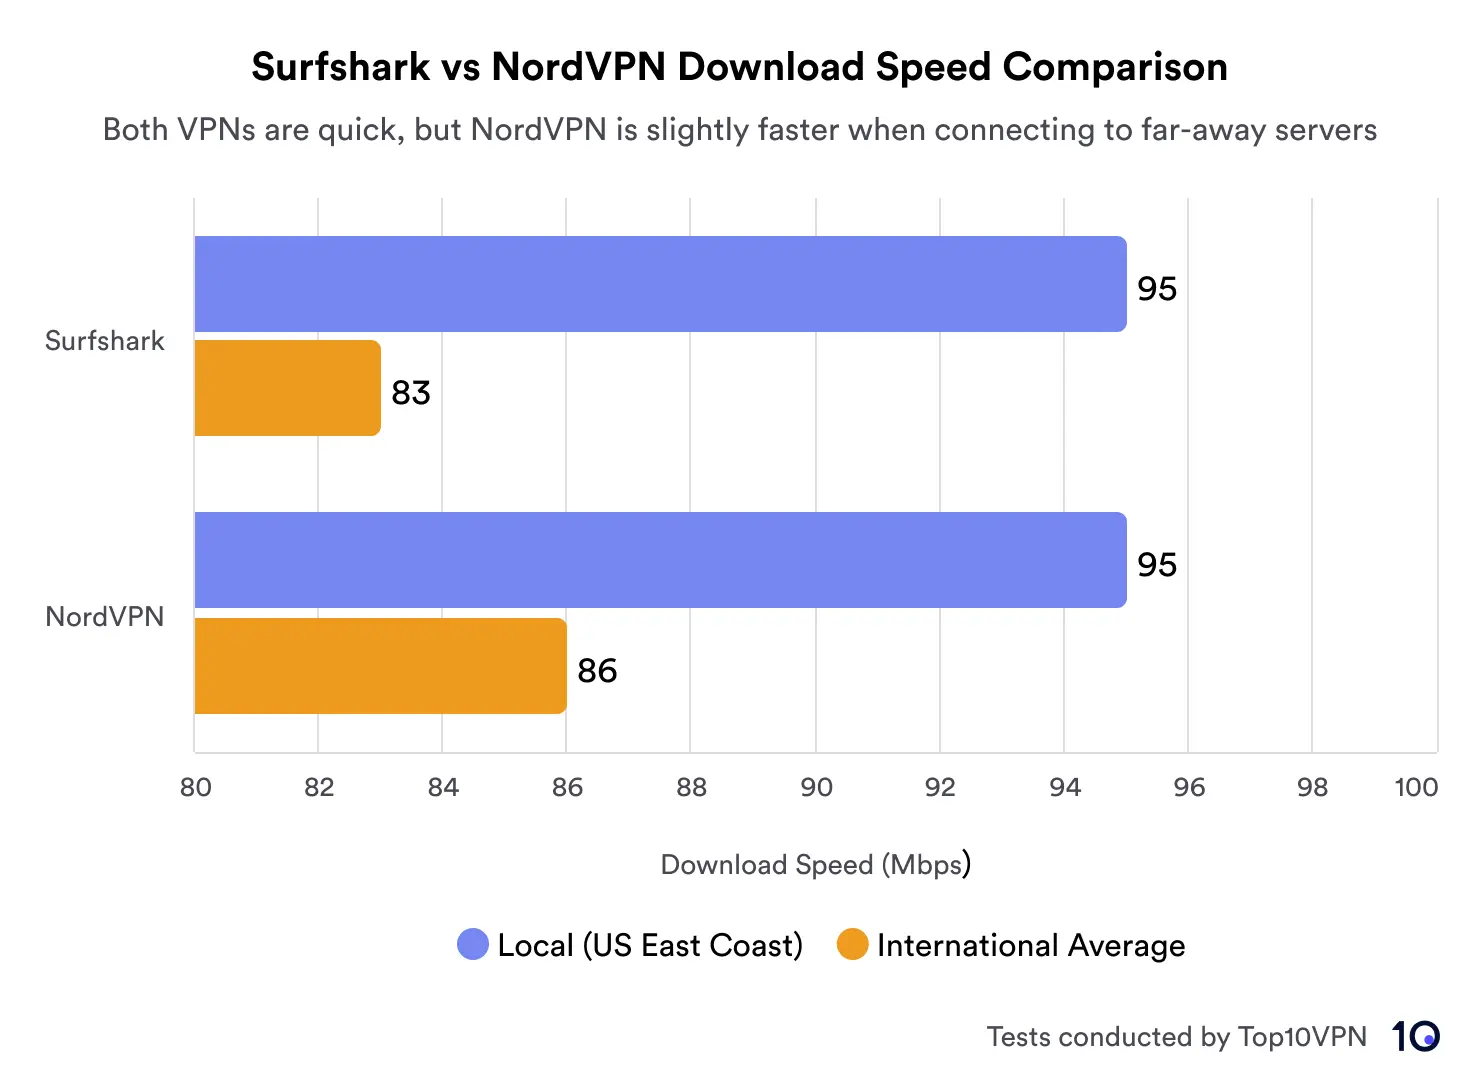 Bar chart comparing NordVPN and Surfshark's download speeds